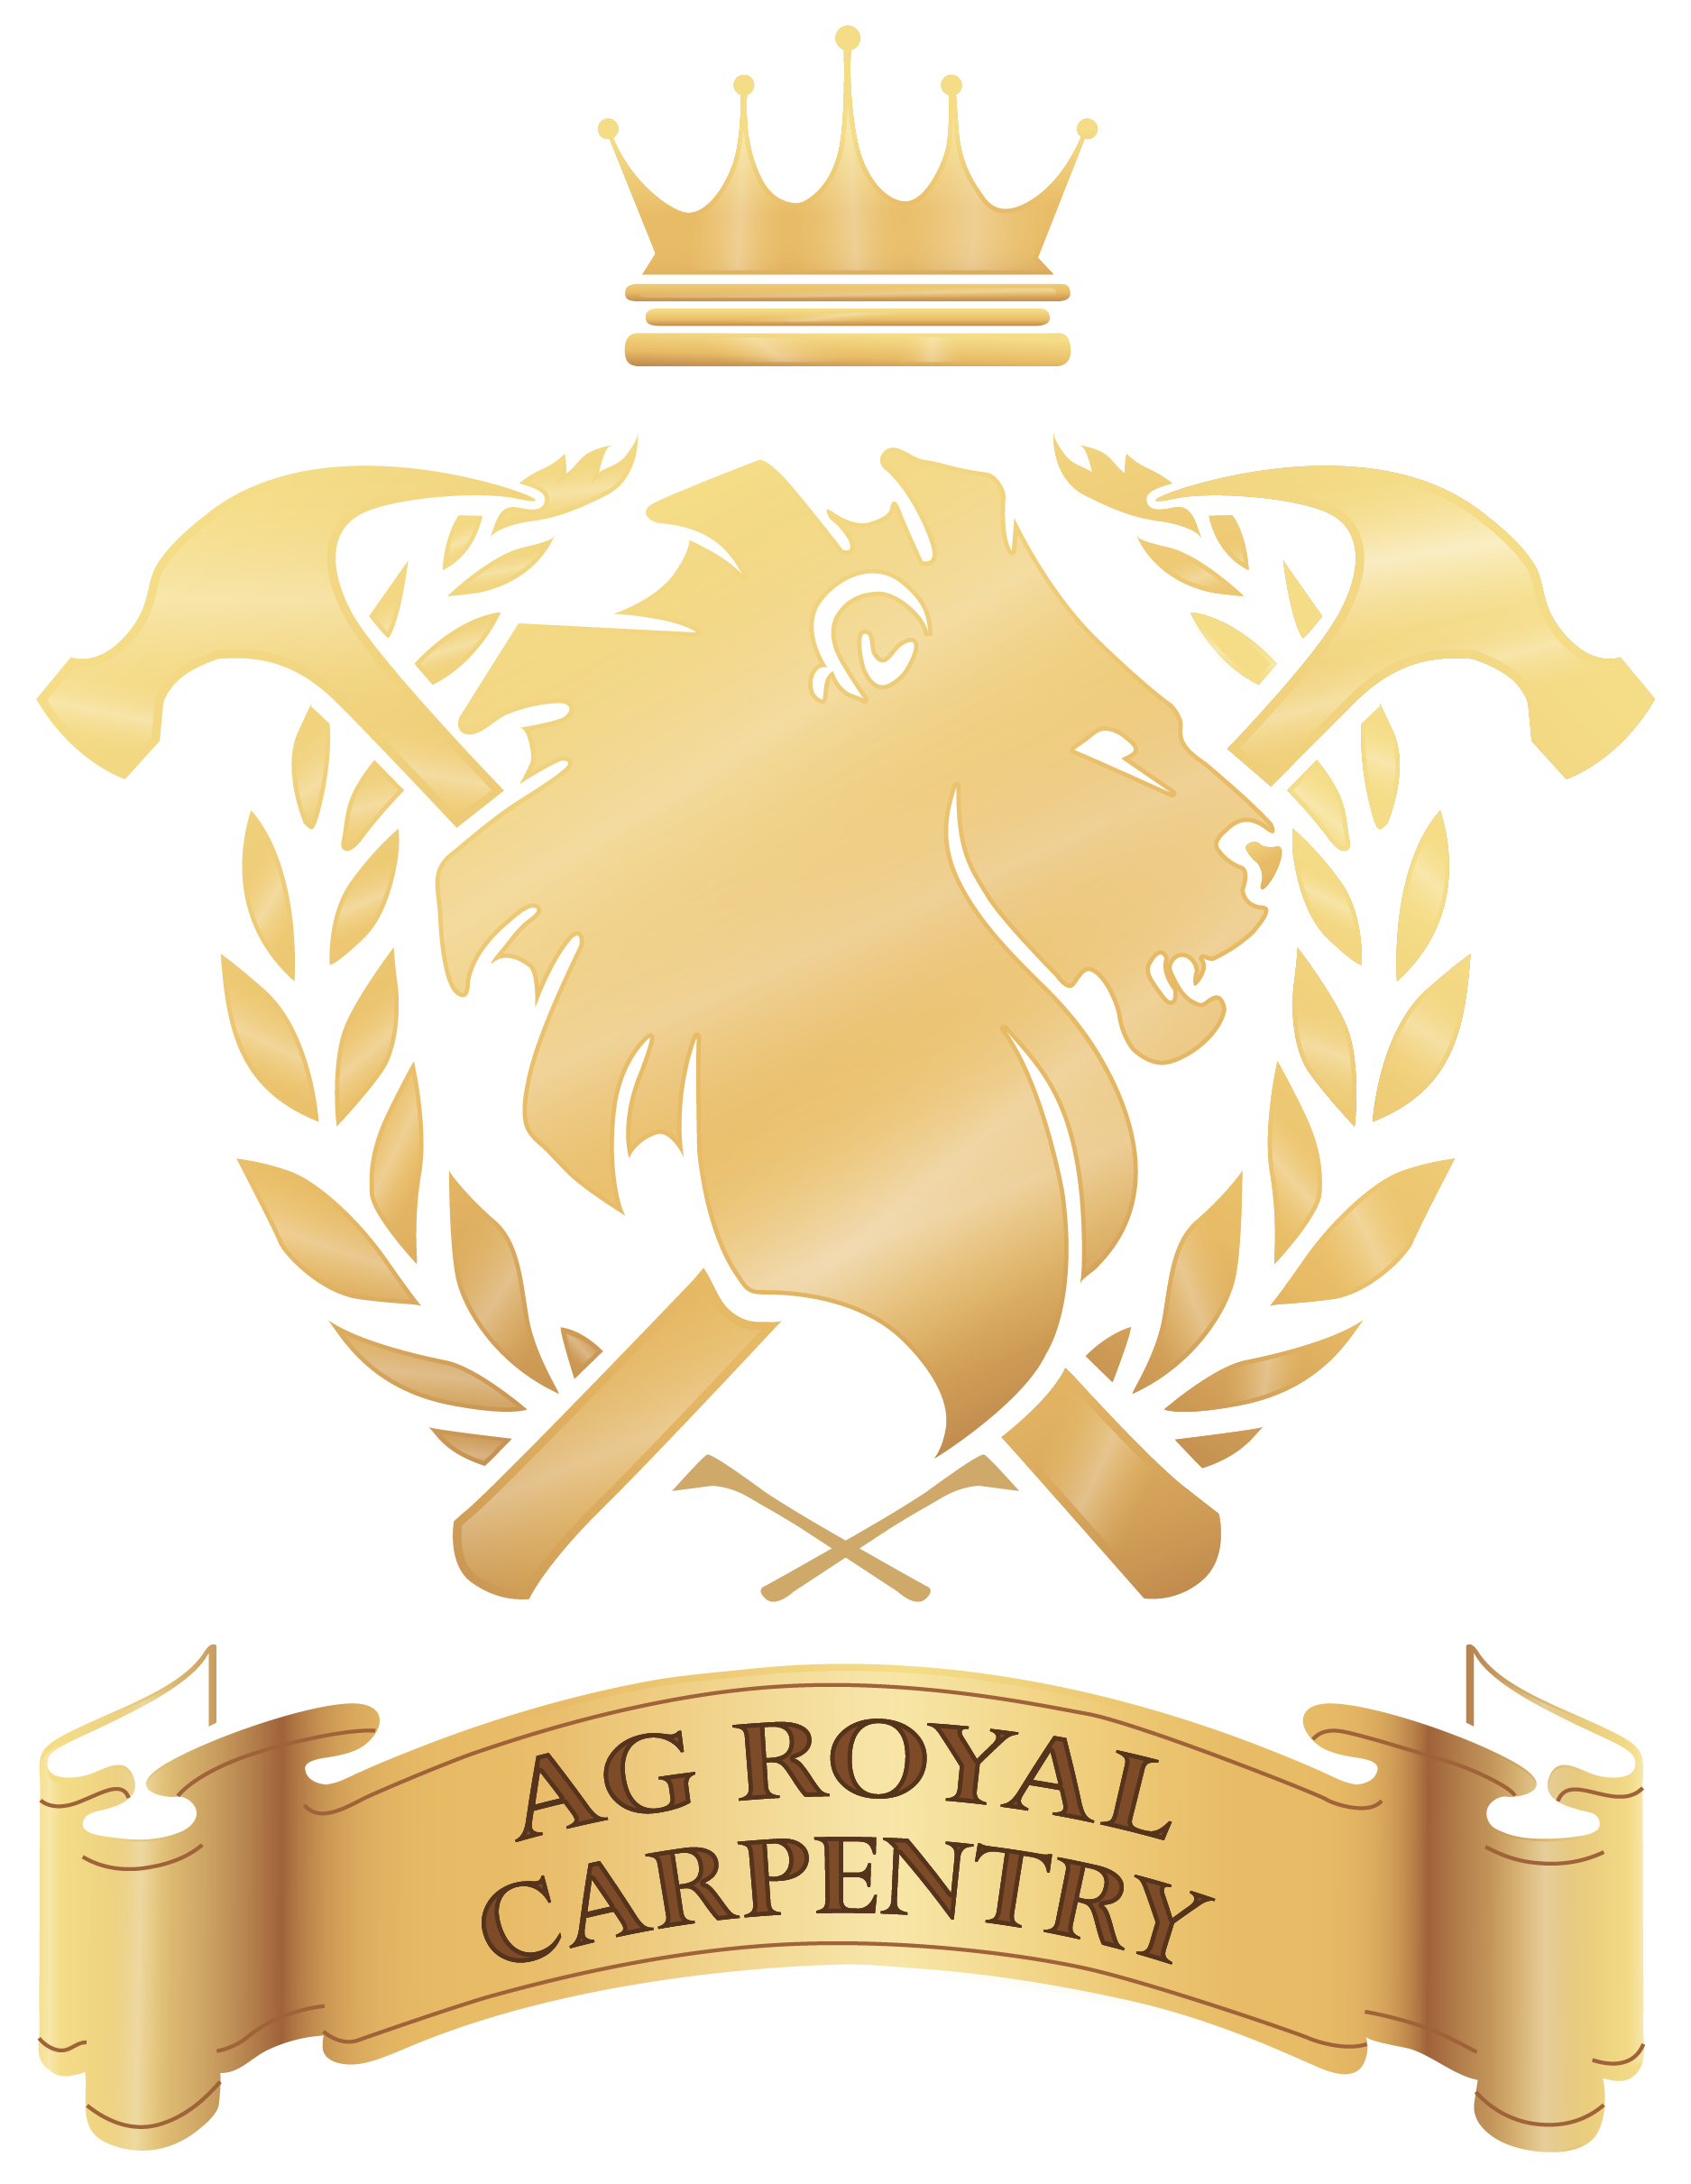 AG Royal Carpentry